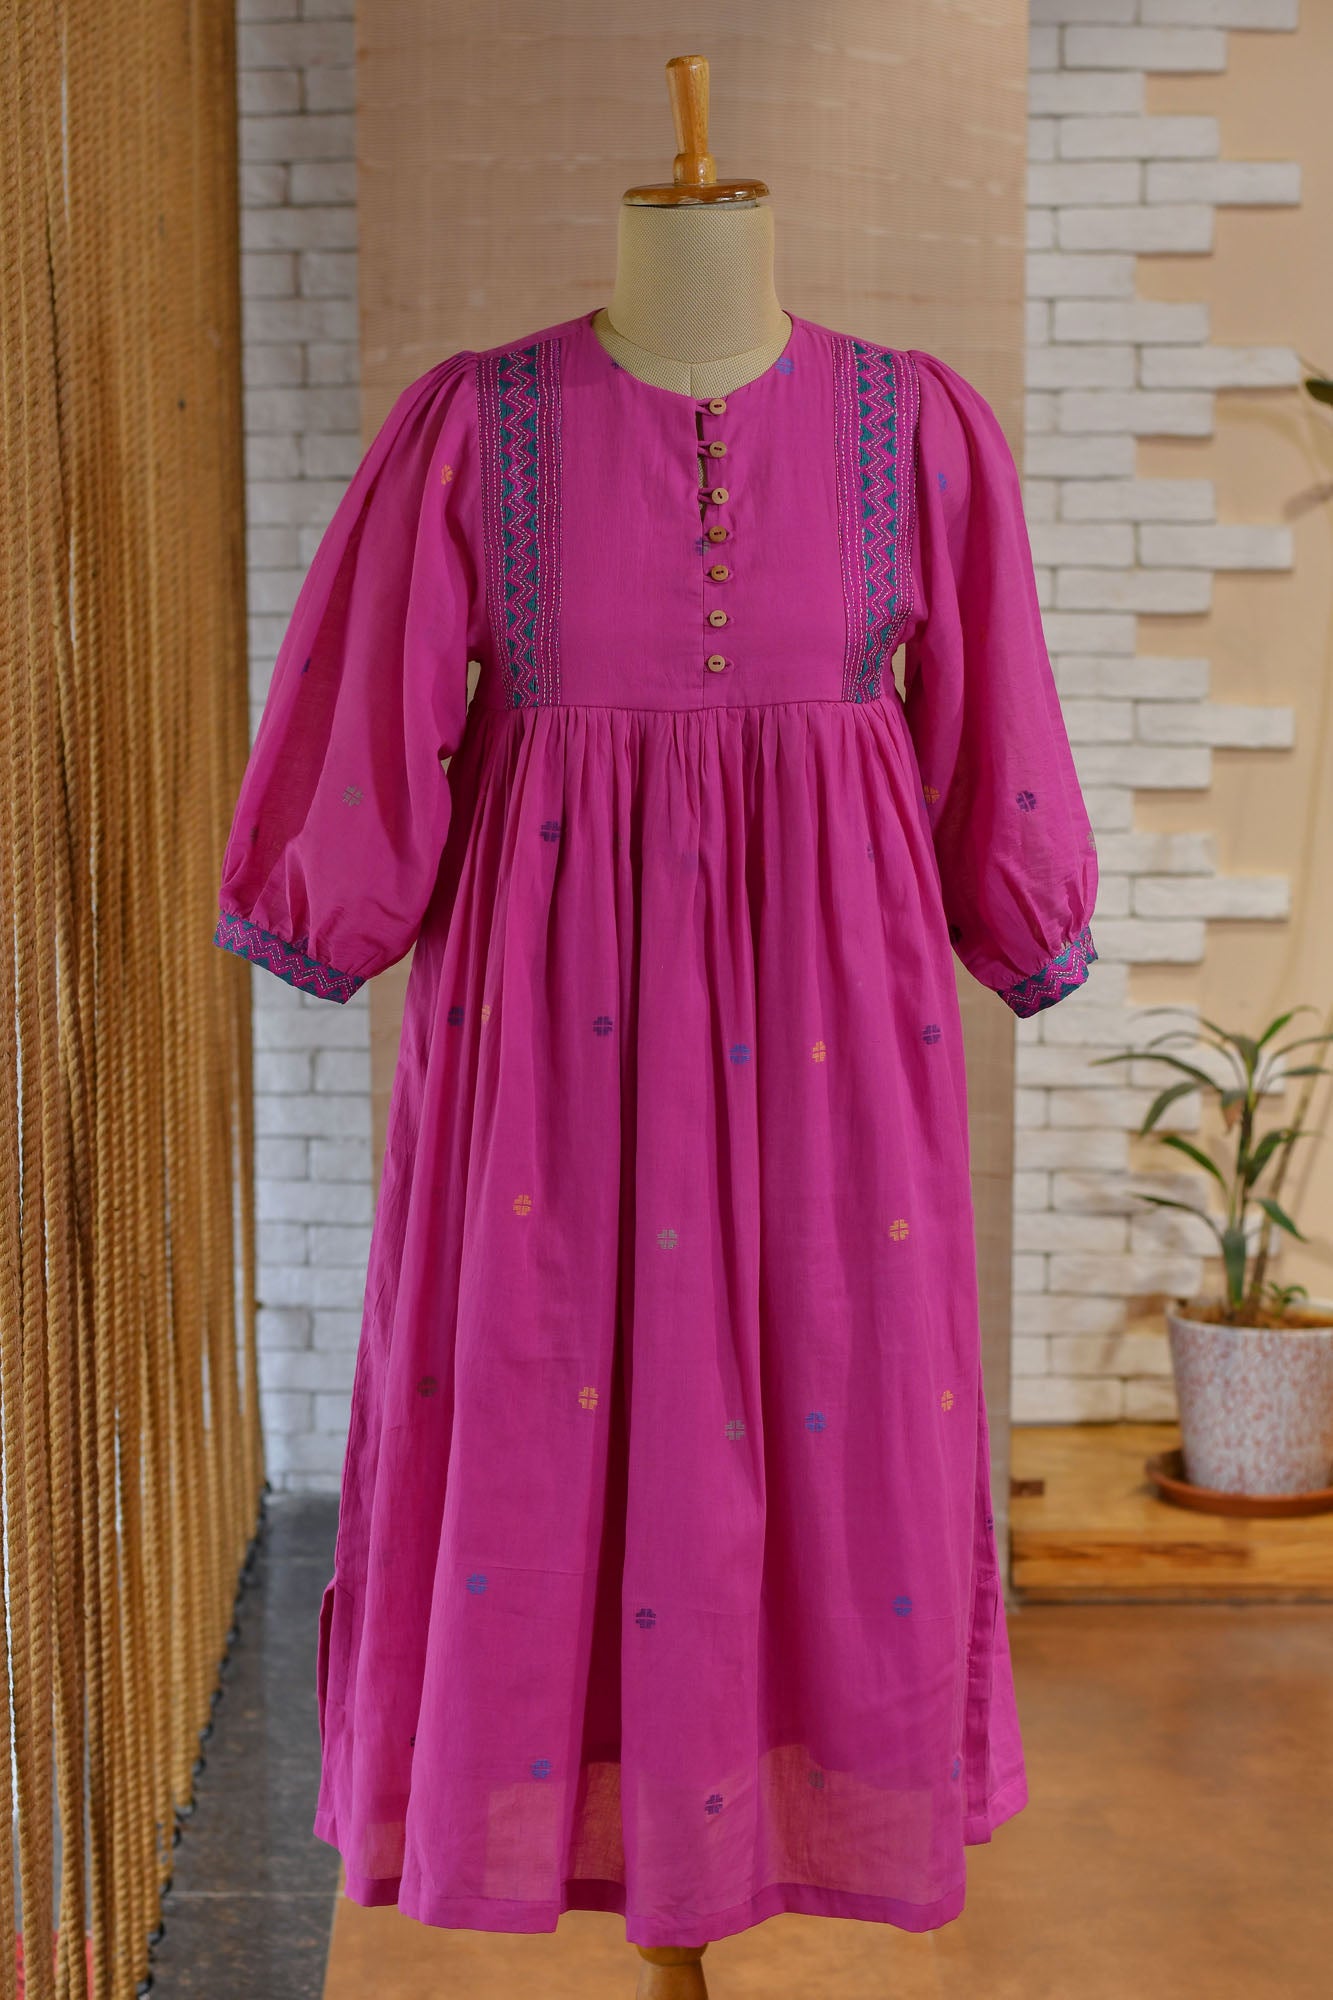 Hand woven jamdani with hand embroidered dress